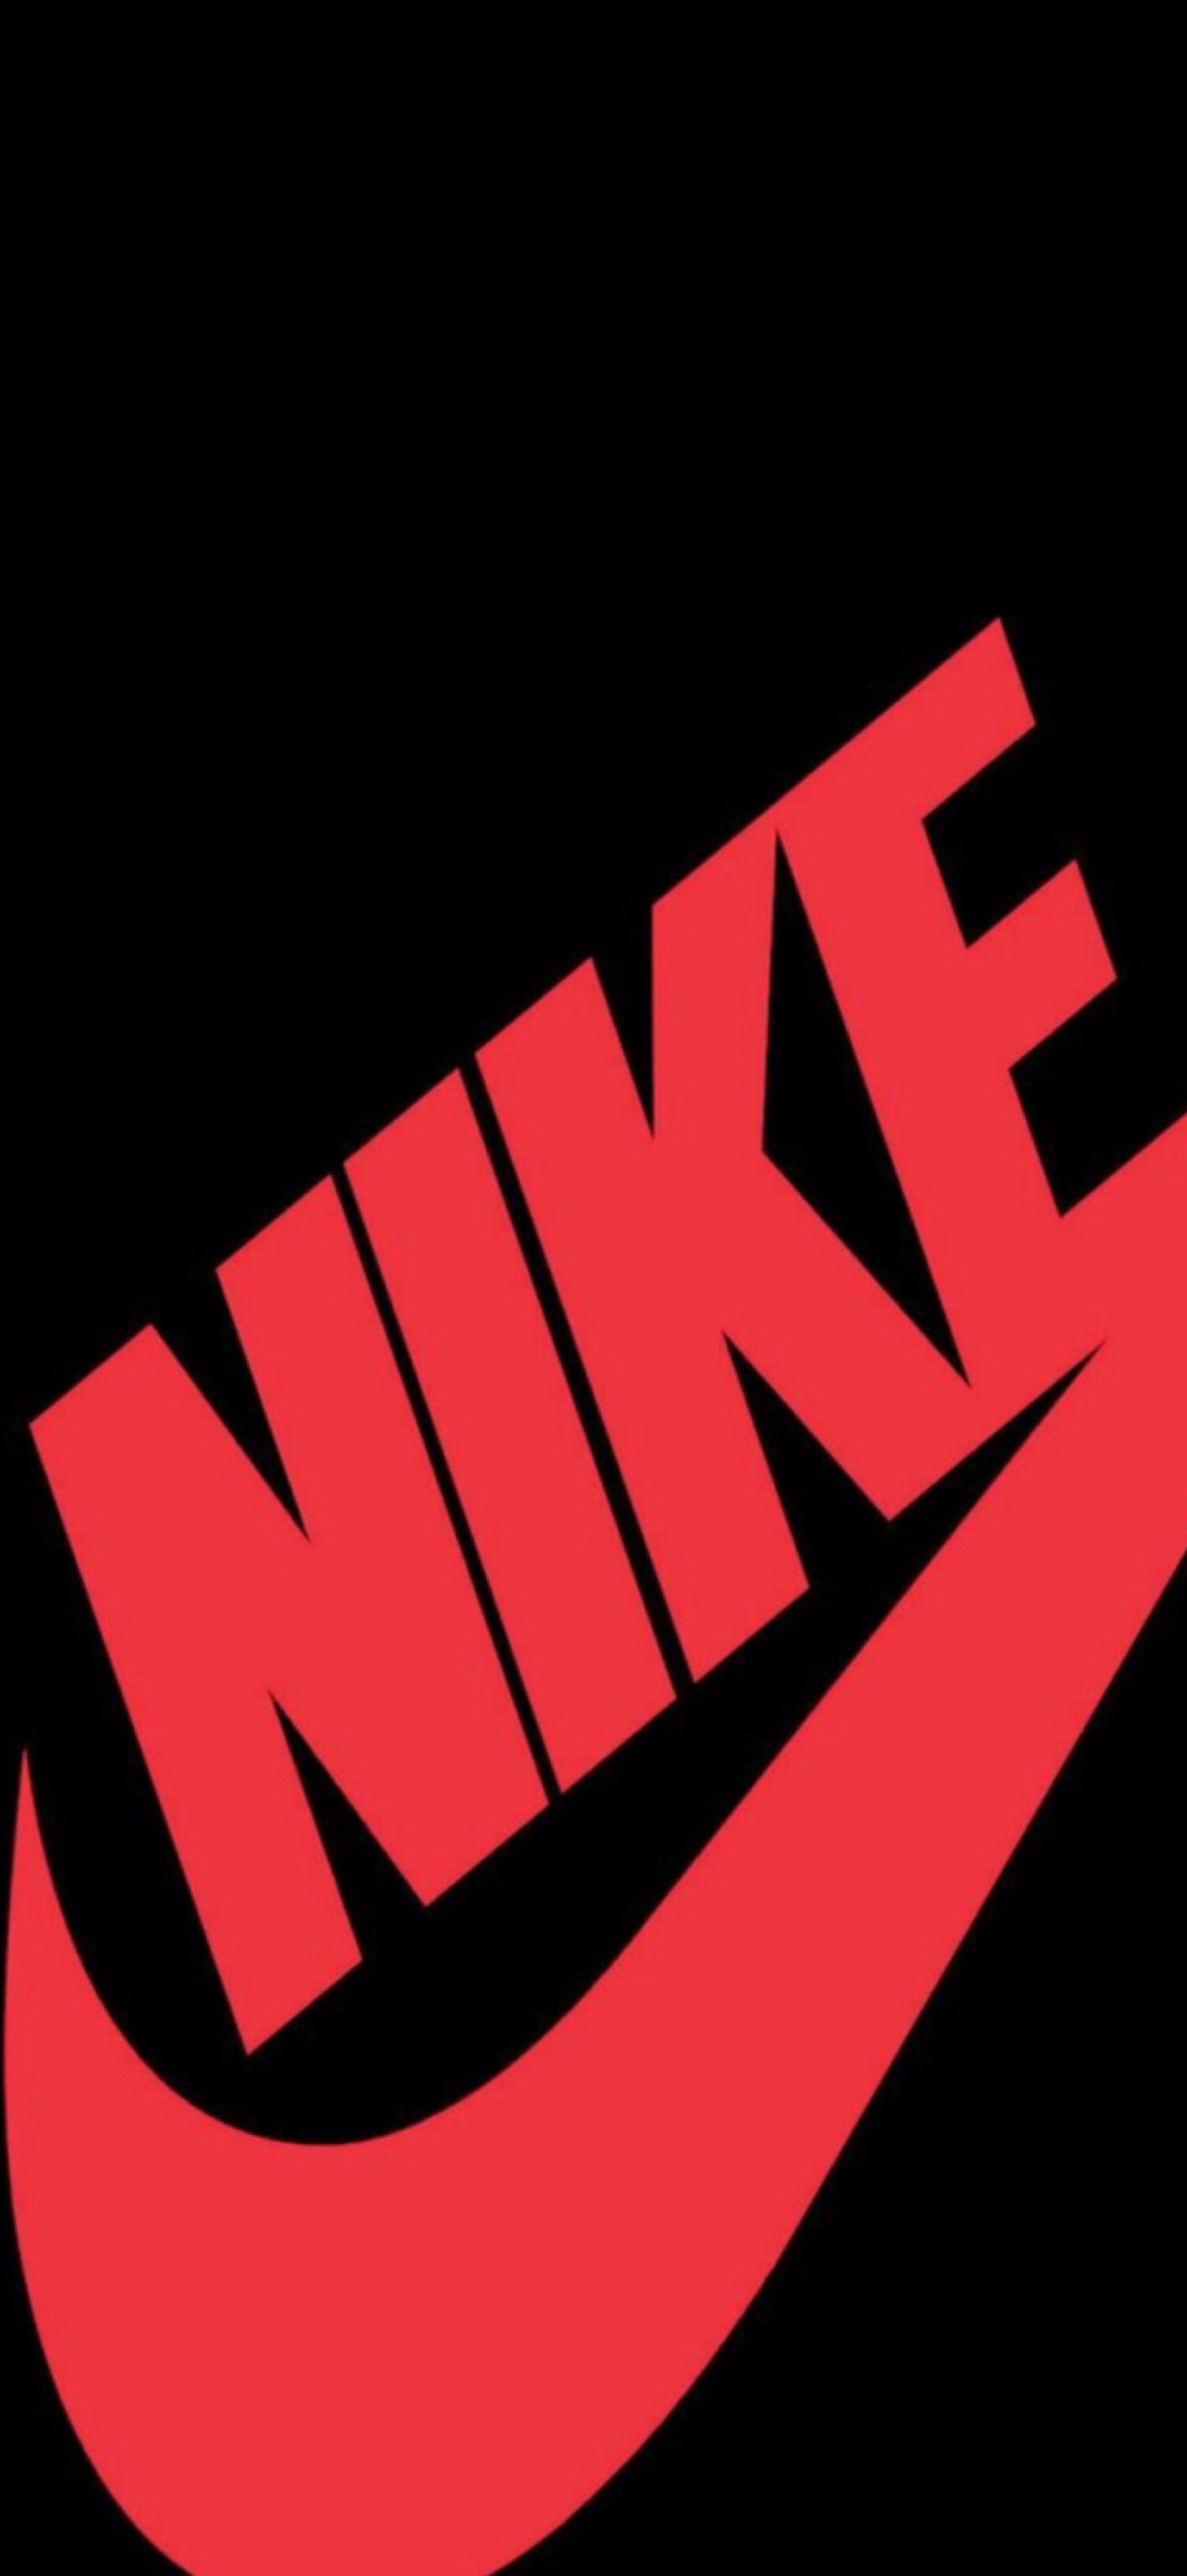 Wallpaper iPhone X logo. Nike logo wallpaper, Nike wallpaper, Nike wallpaper iphone